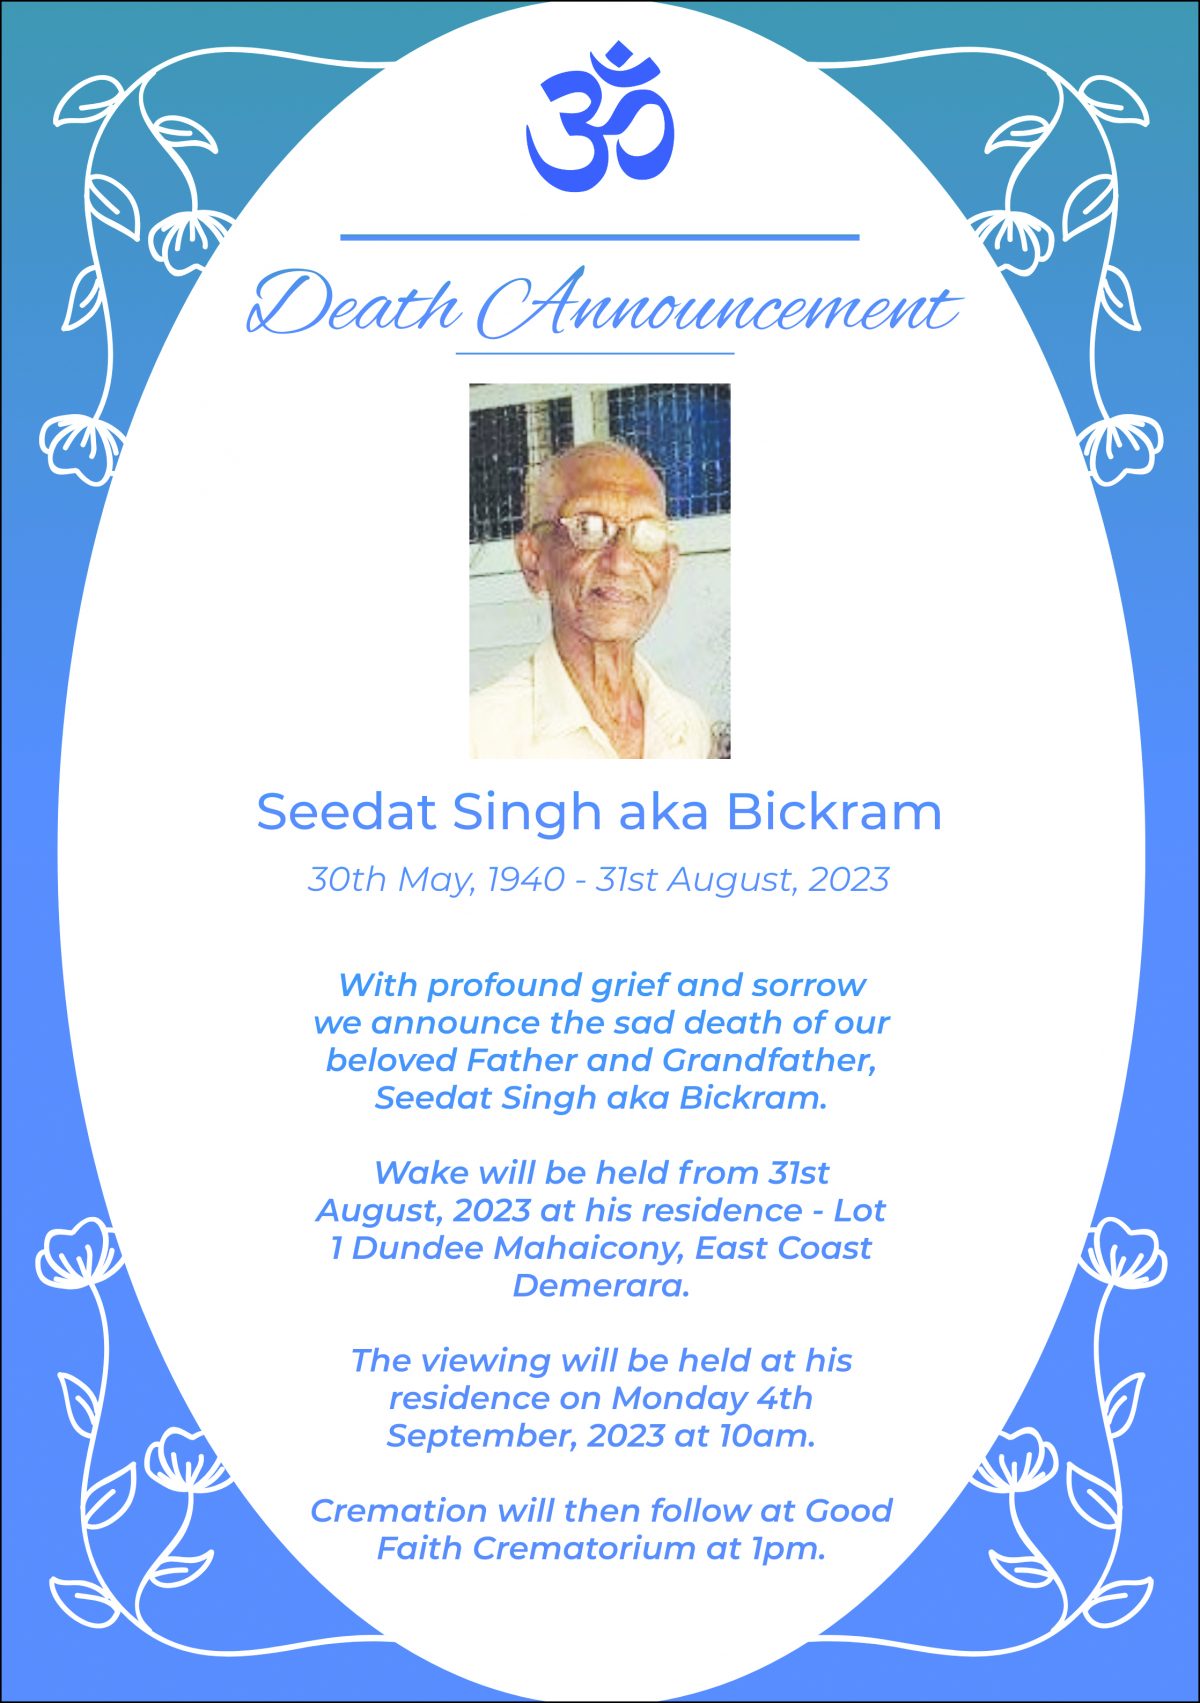 Seedat Singh aka Bickram